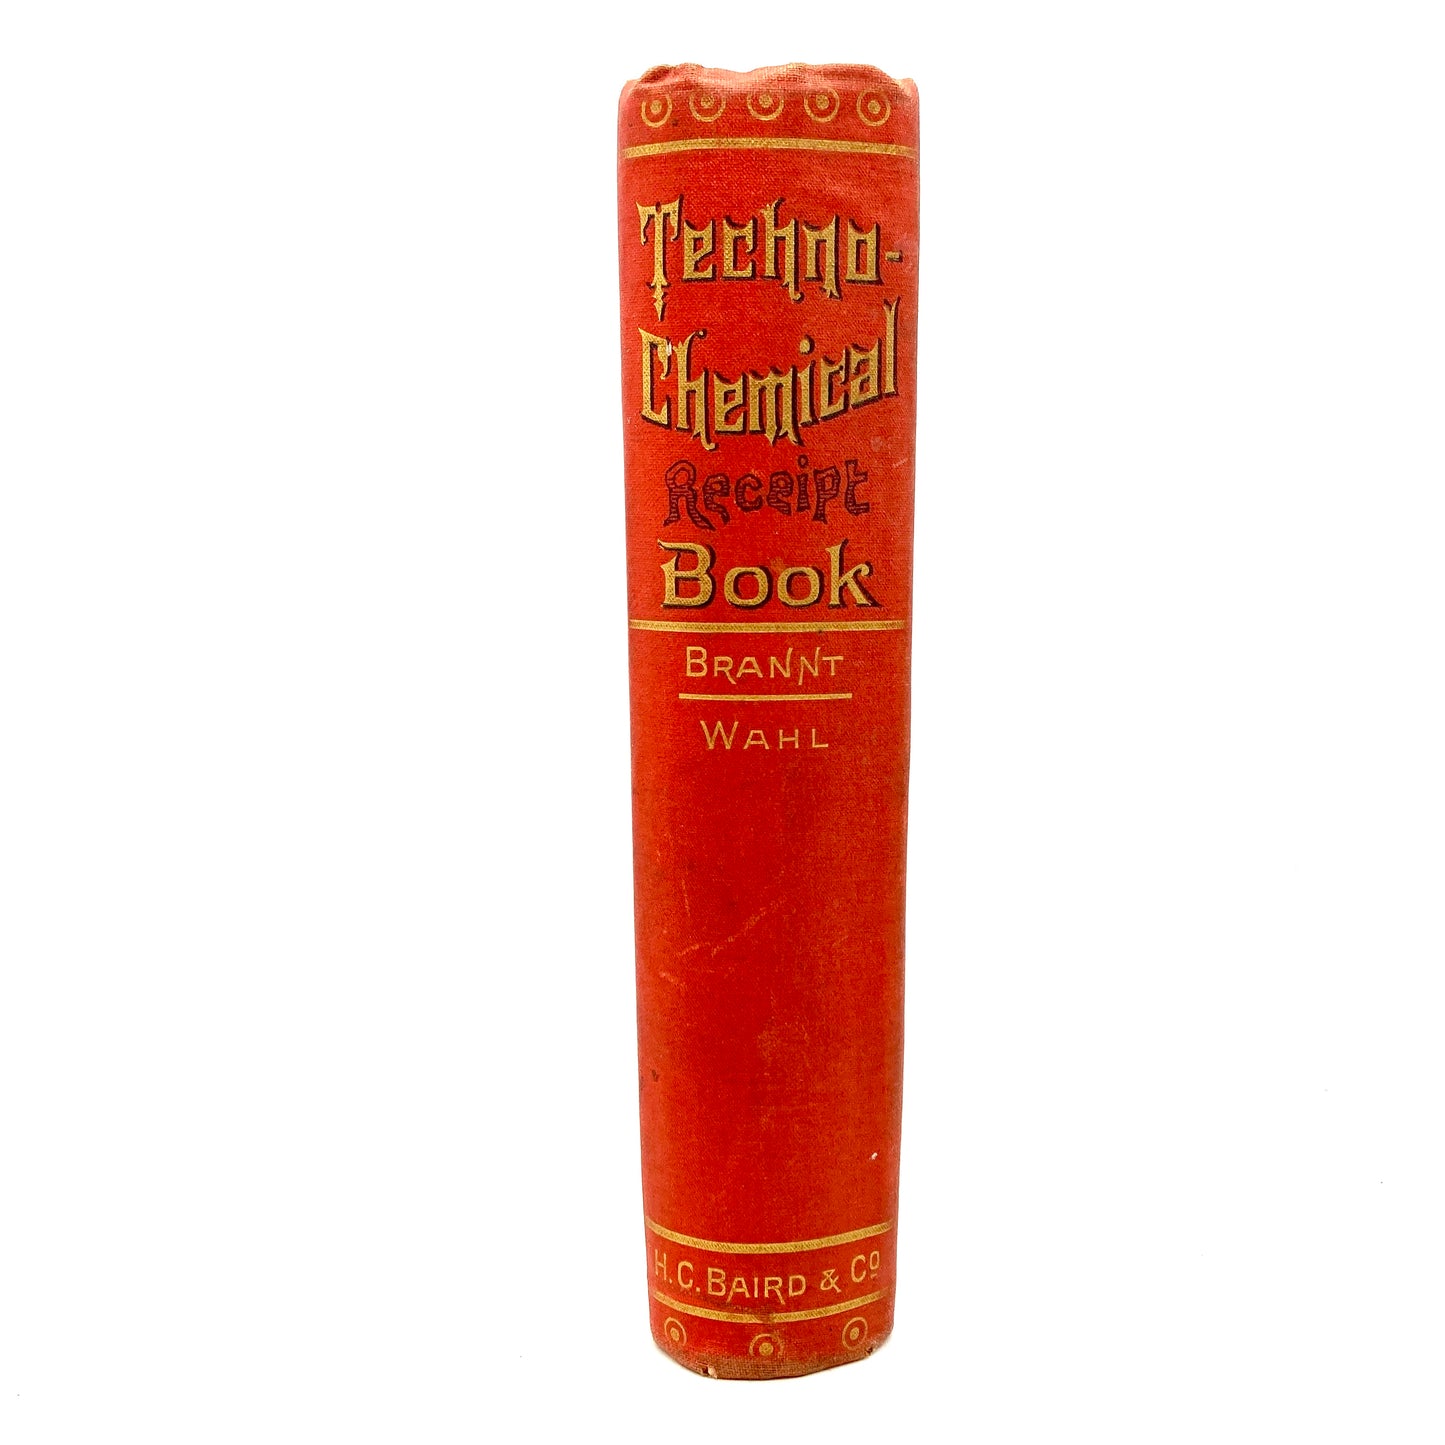 BRANNT, William T. "The Techno-Chemical Receipt Book" [Henry Carey Baird, 1887]